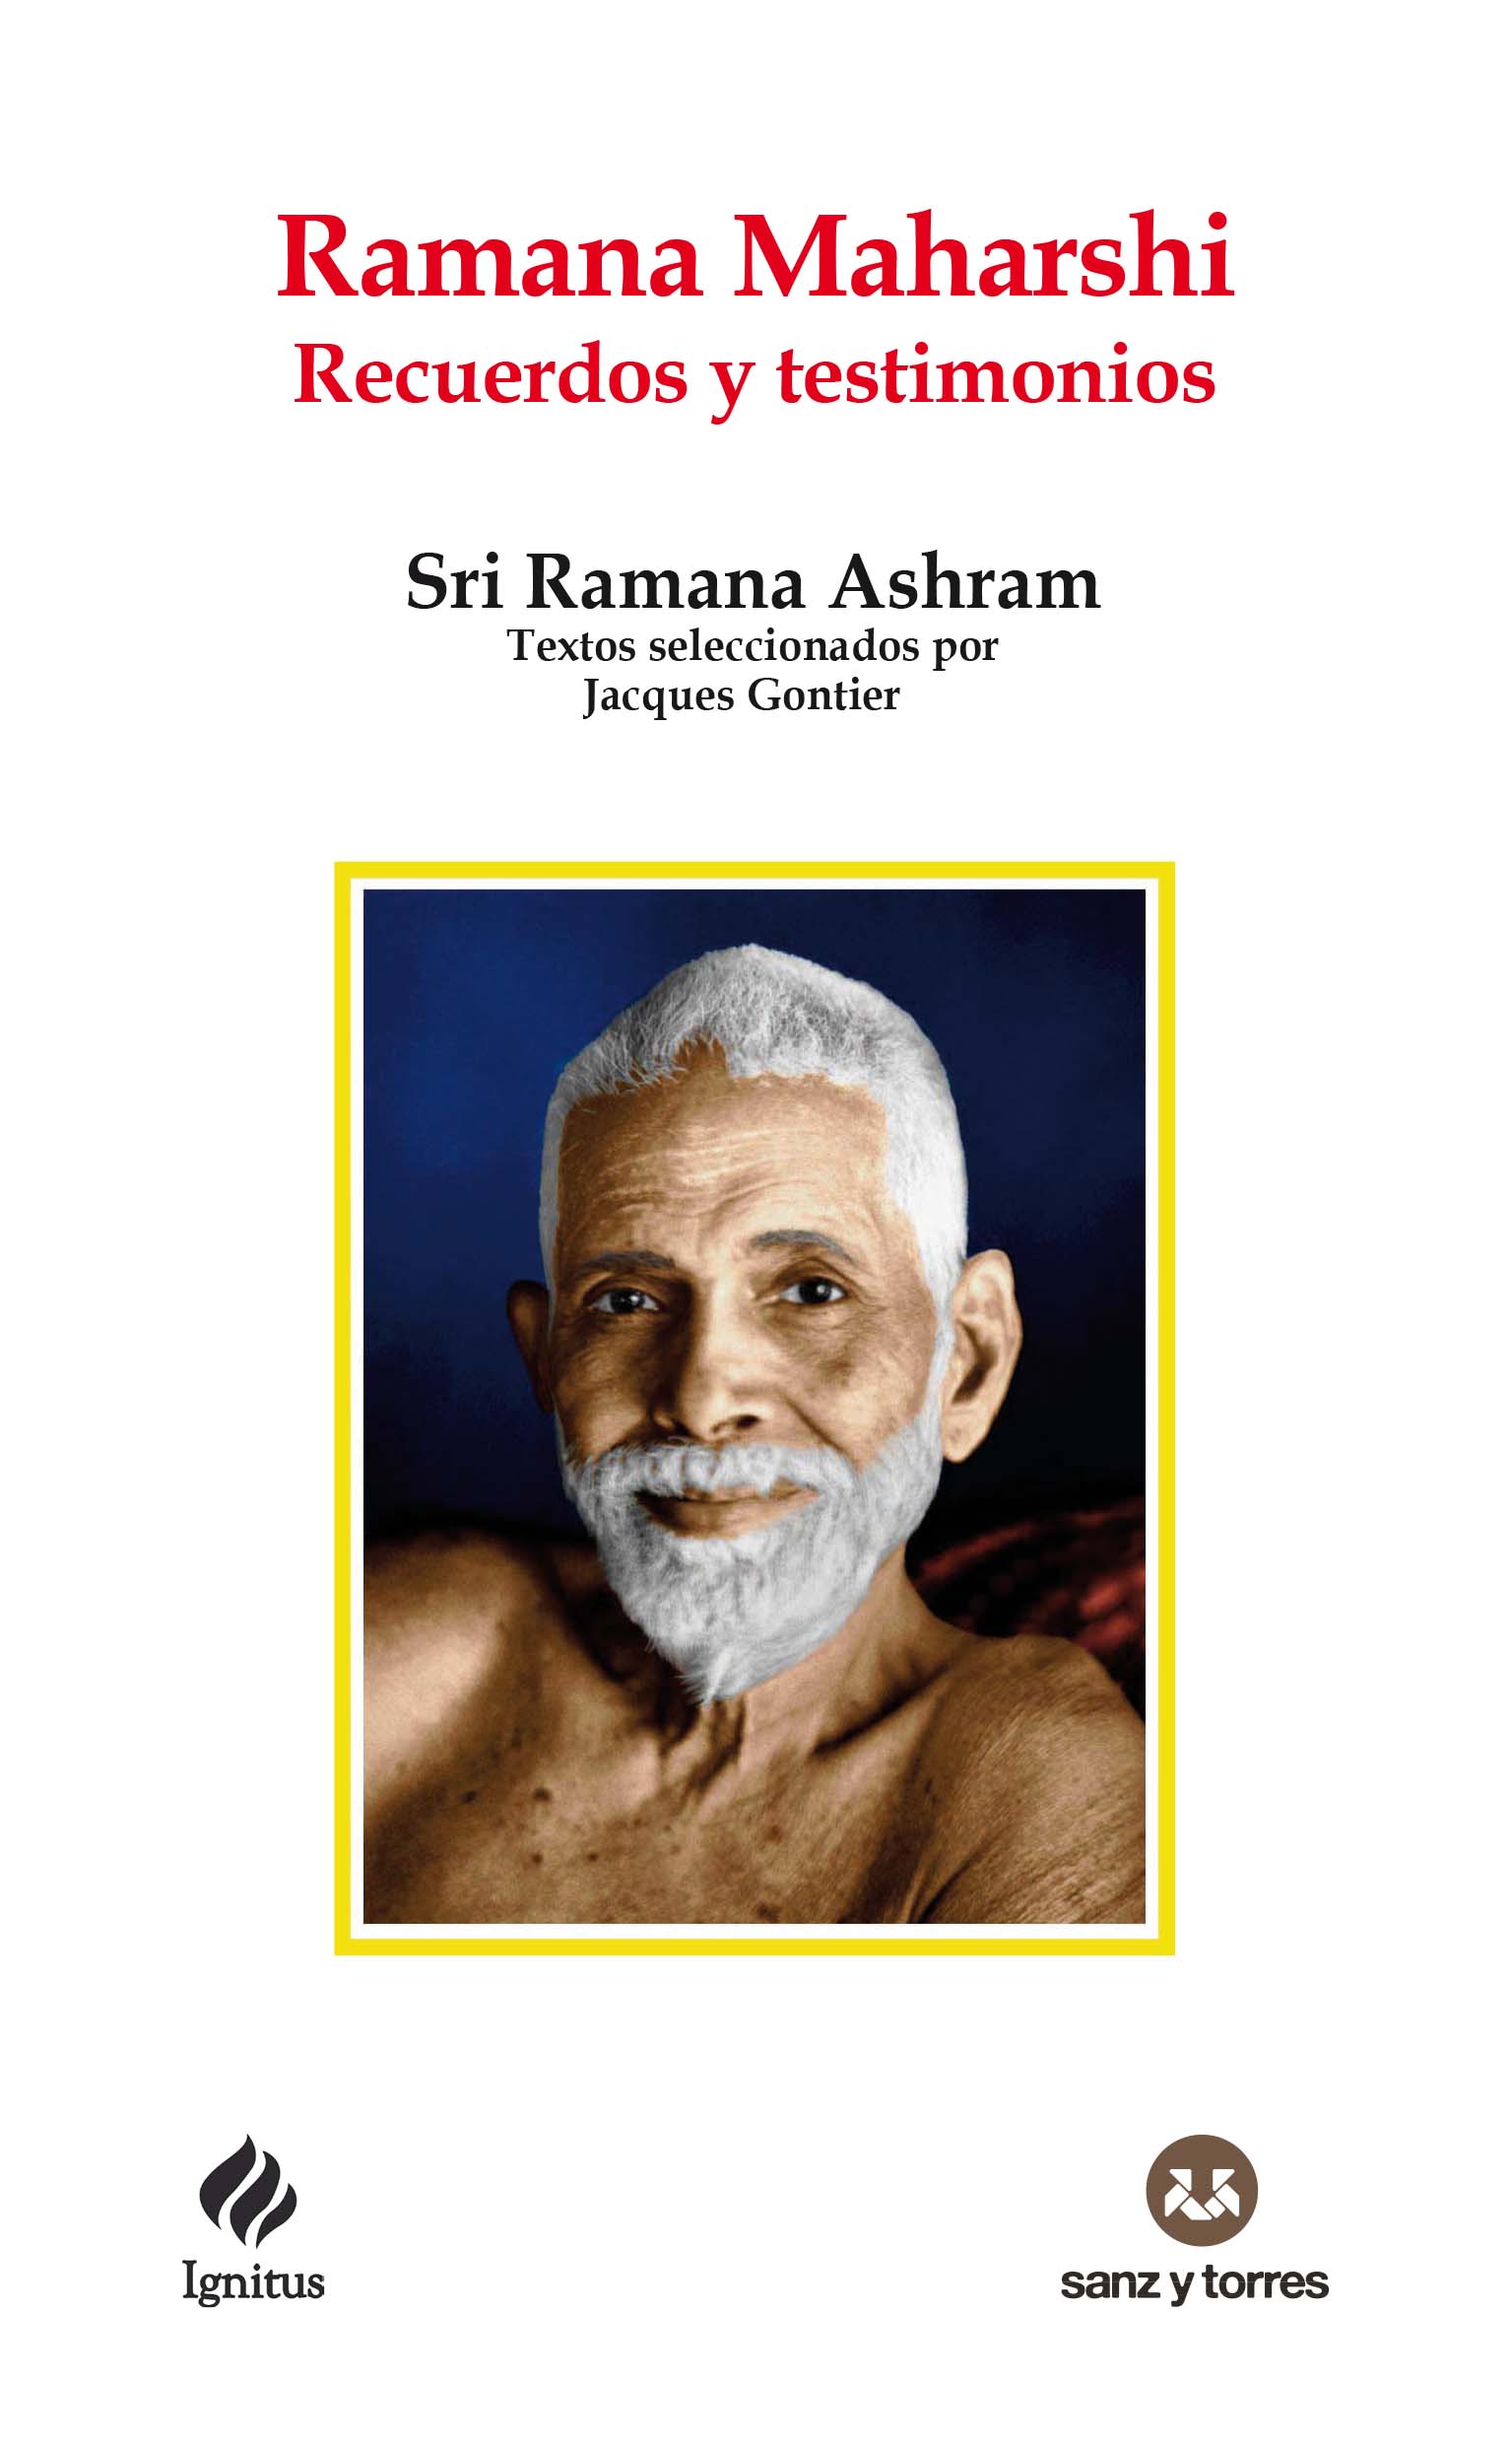 Ramana Maharshi
Recuerdos y testimonios